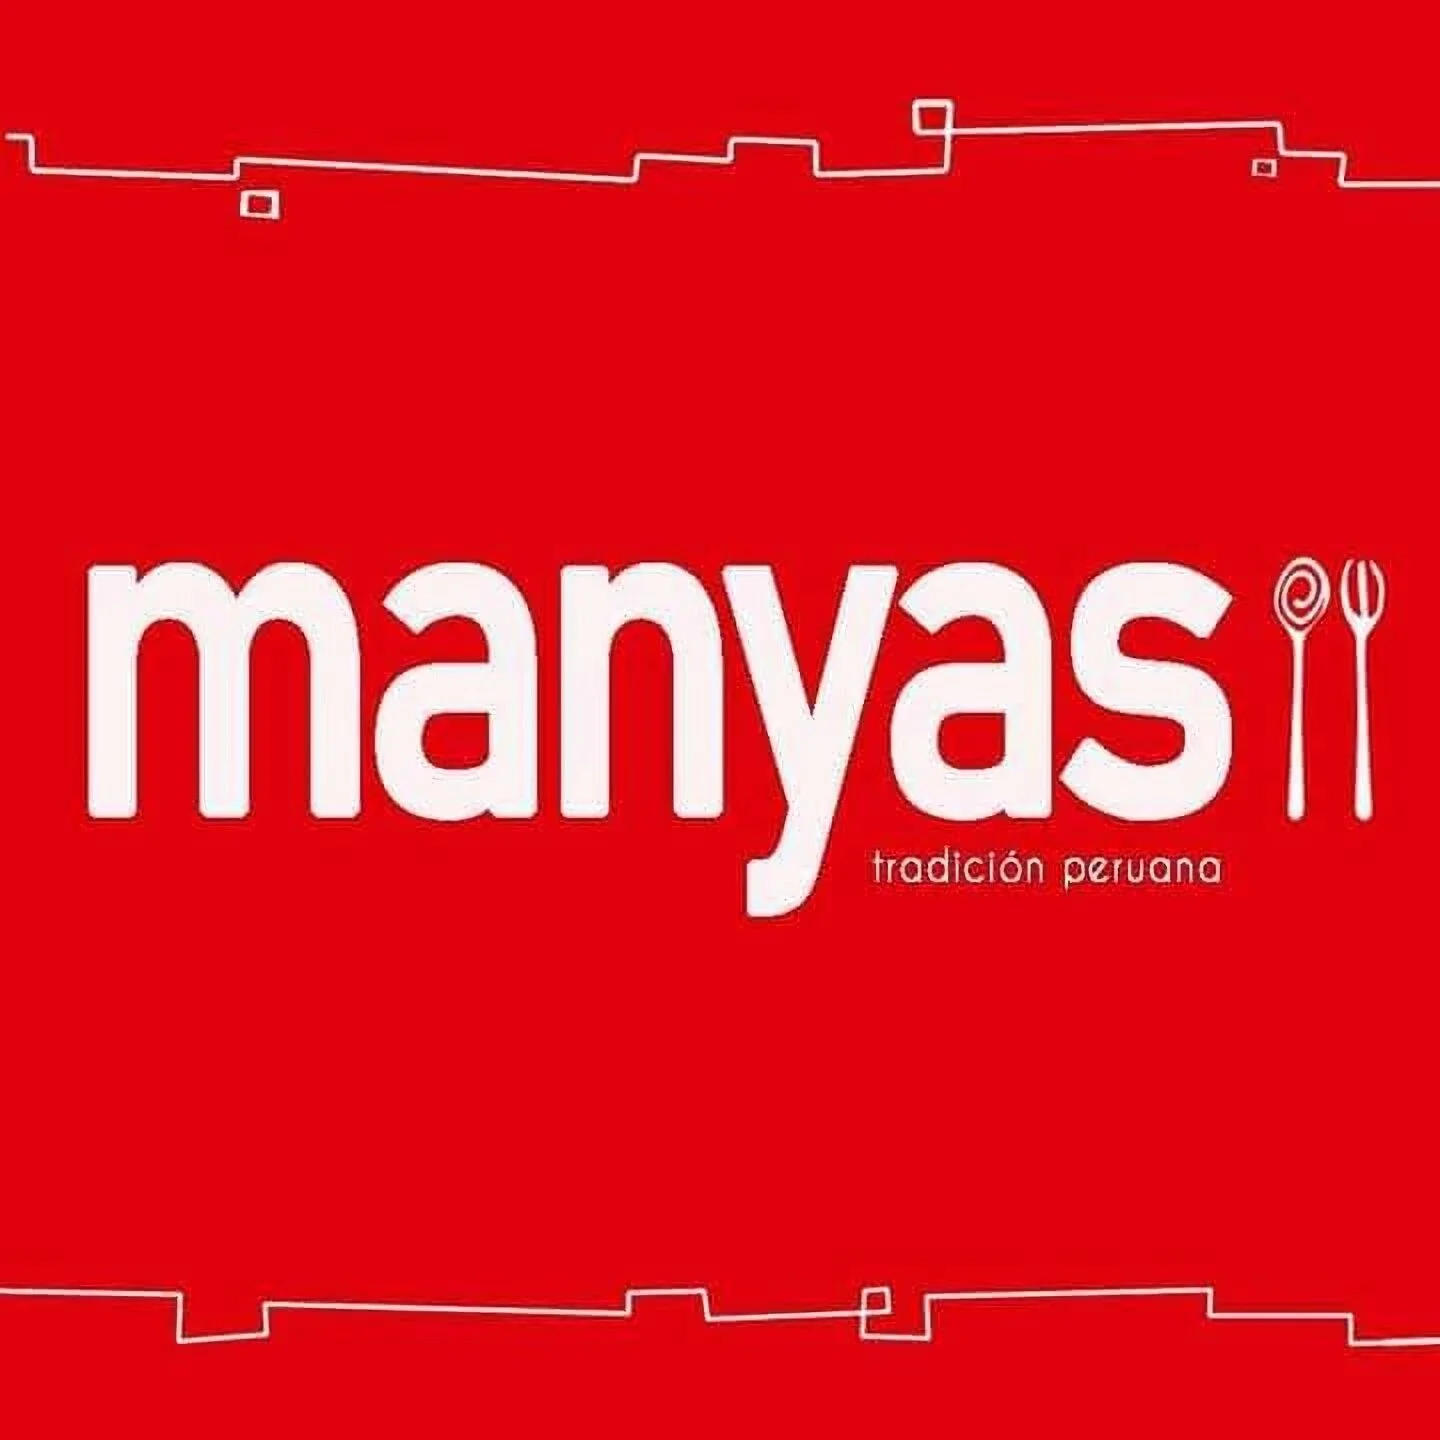 Restaurantes-manyas-portoviejo-tradicion-peruana-20218